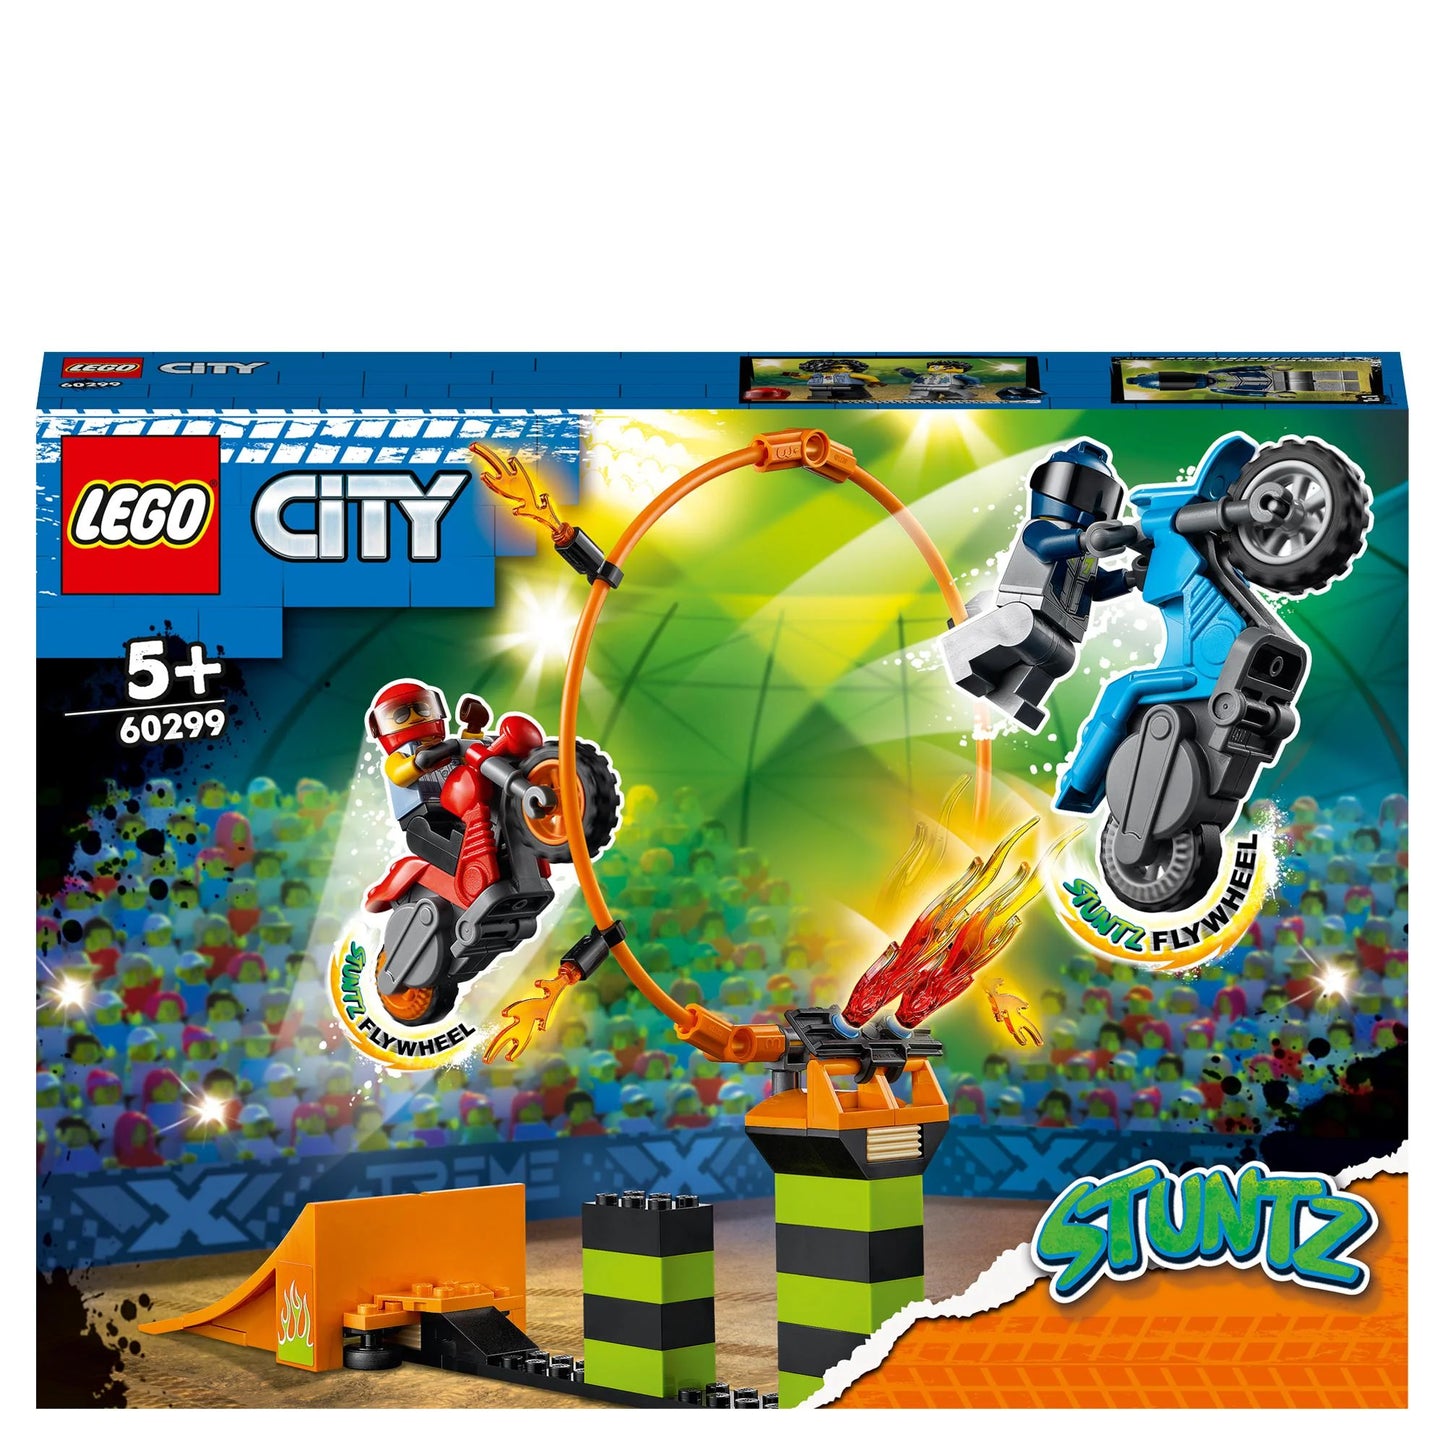 Stunt Competition-LEGO City